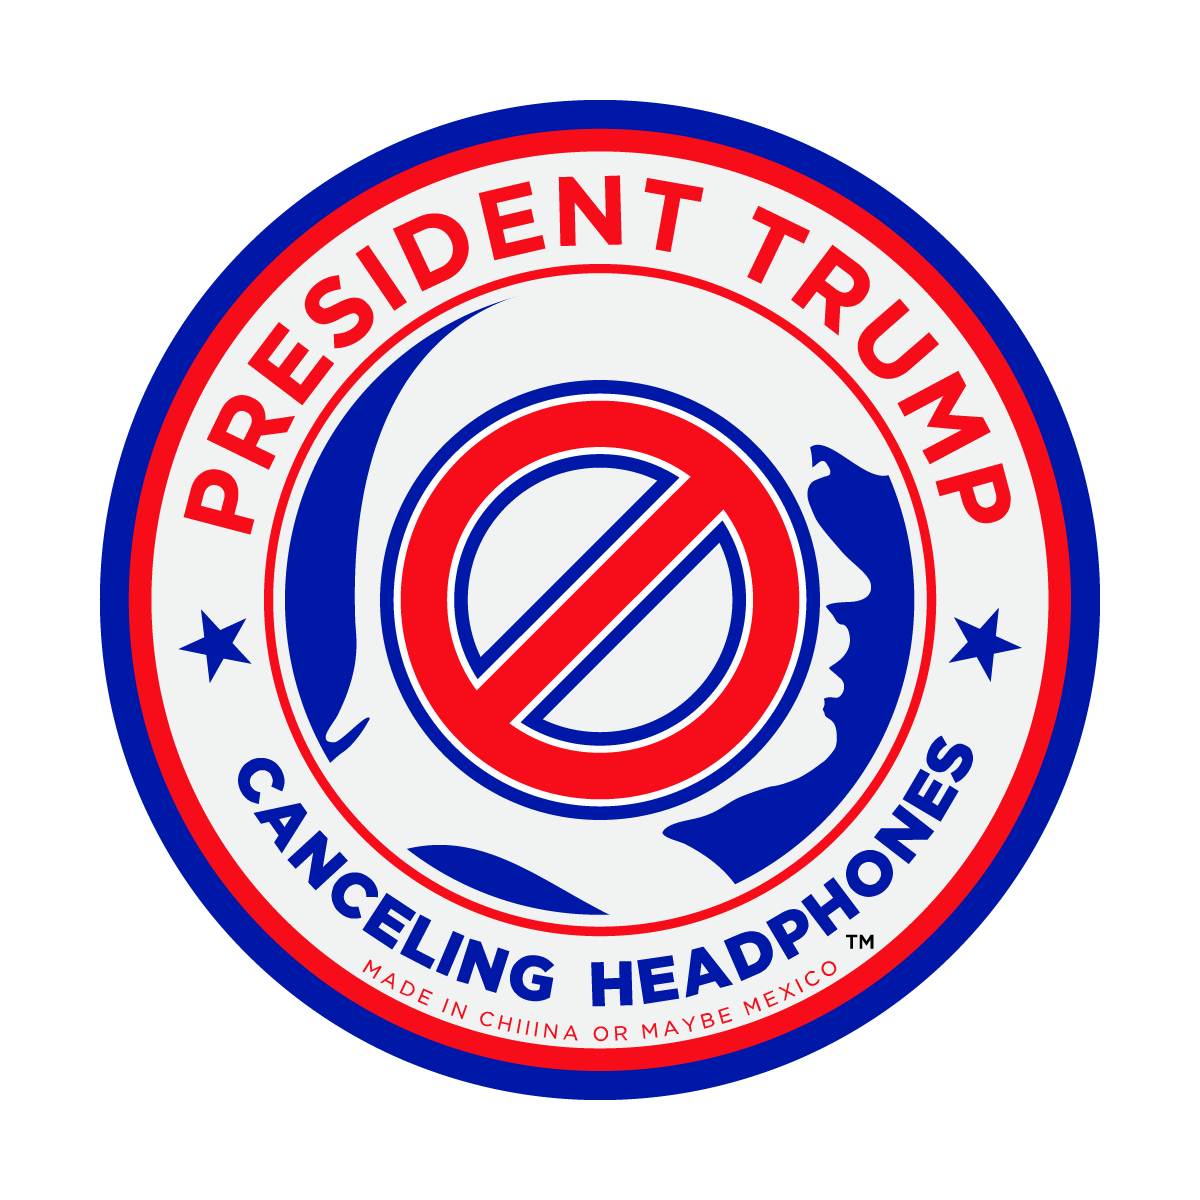 Official President Trump Canceled Headphones tm Logo